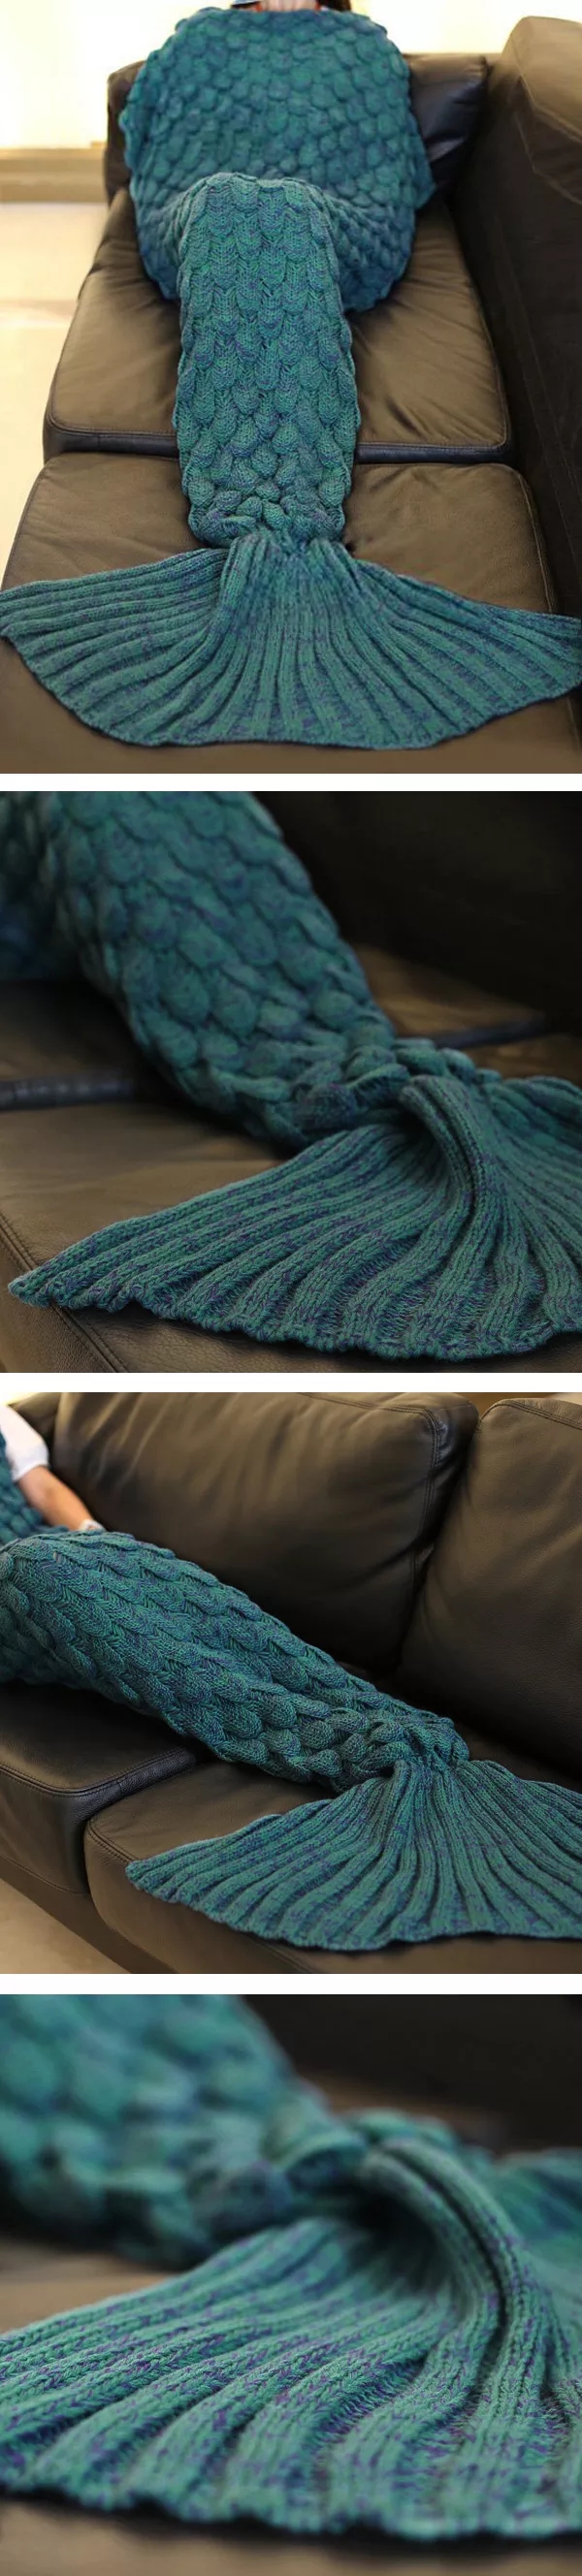 195x90cm-Yarn-Knitted-Mermaid-Tail-Blankets-Handmade-Crochet-Throw-Super-Soft-Sofa-Bed-Mat-1071265-2